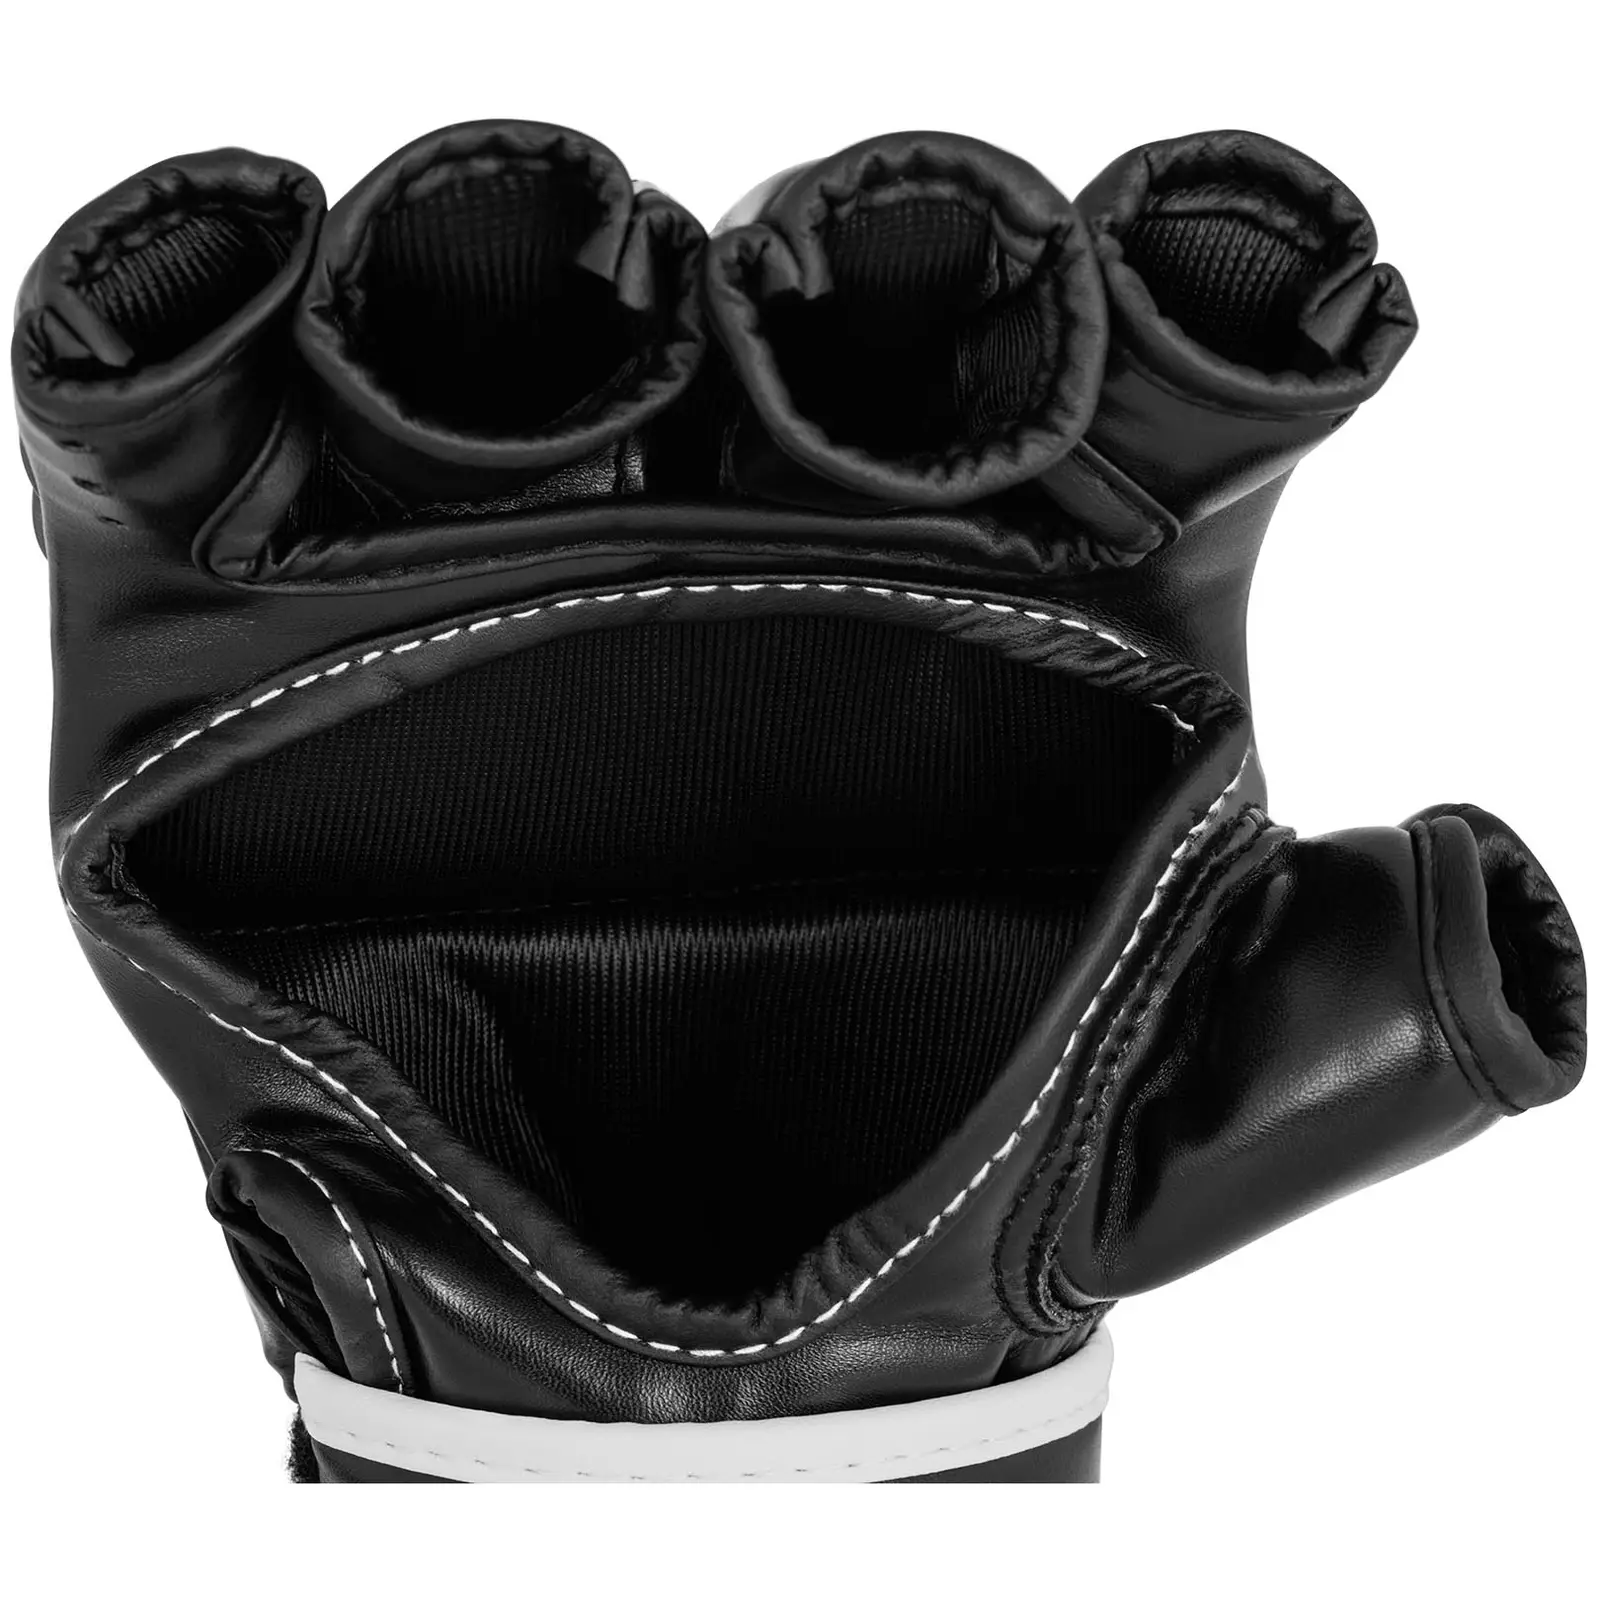 MMA Handschuhe - Gr. S/M - schwarz